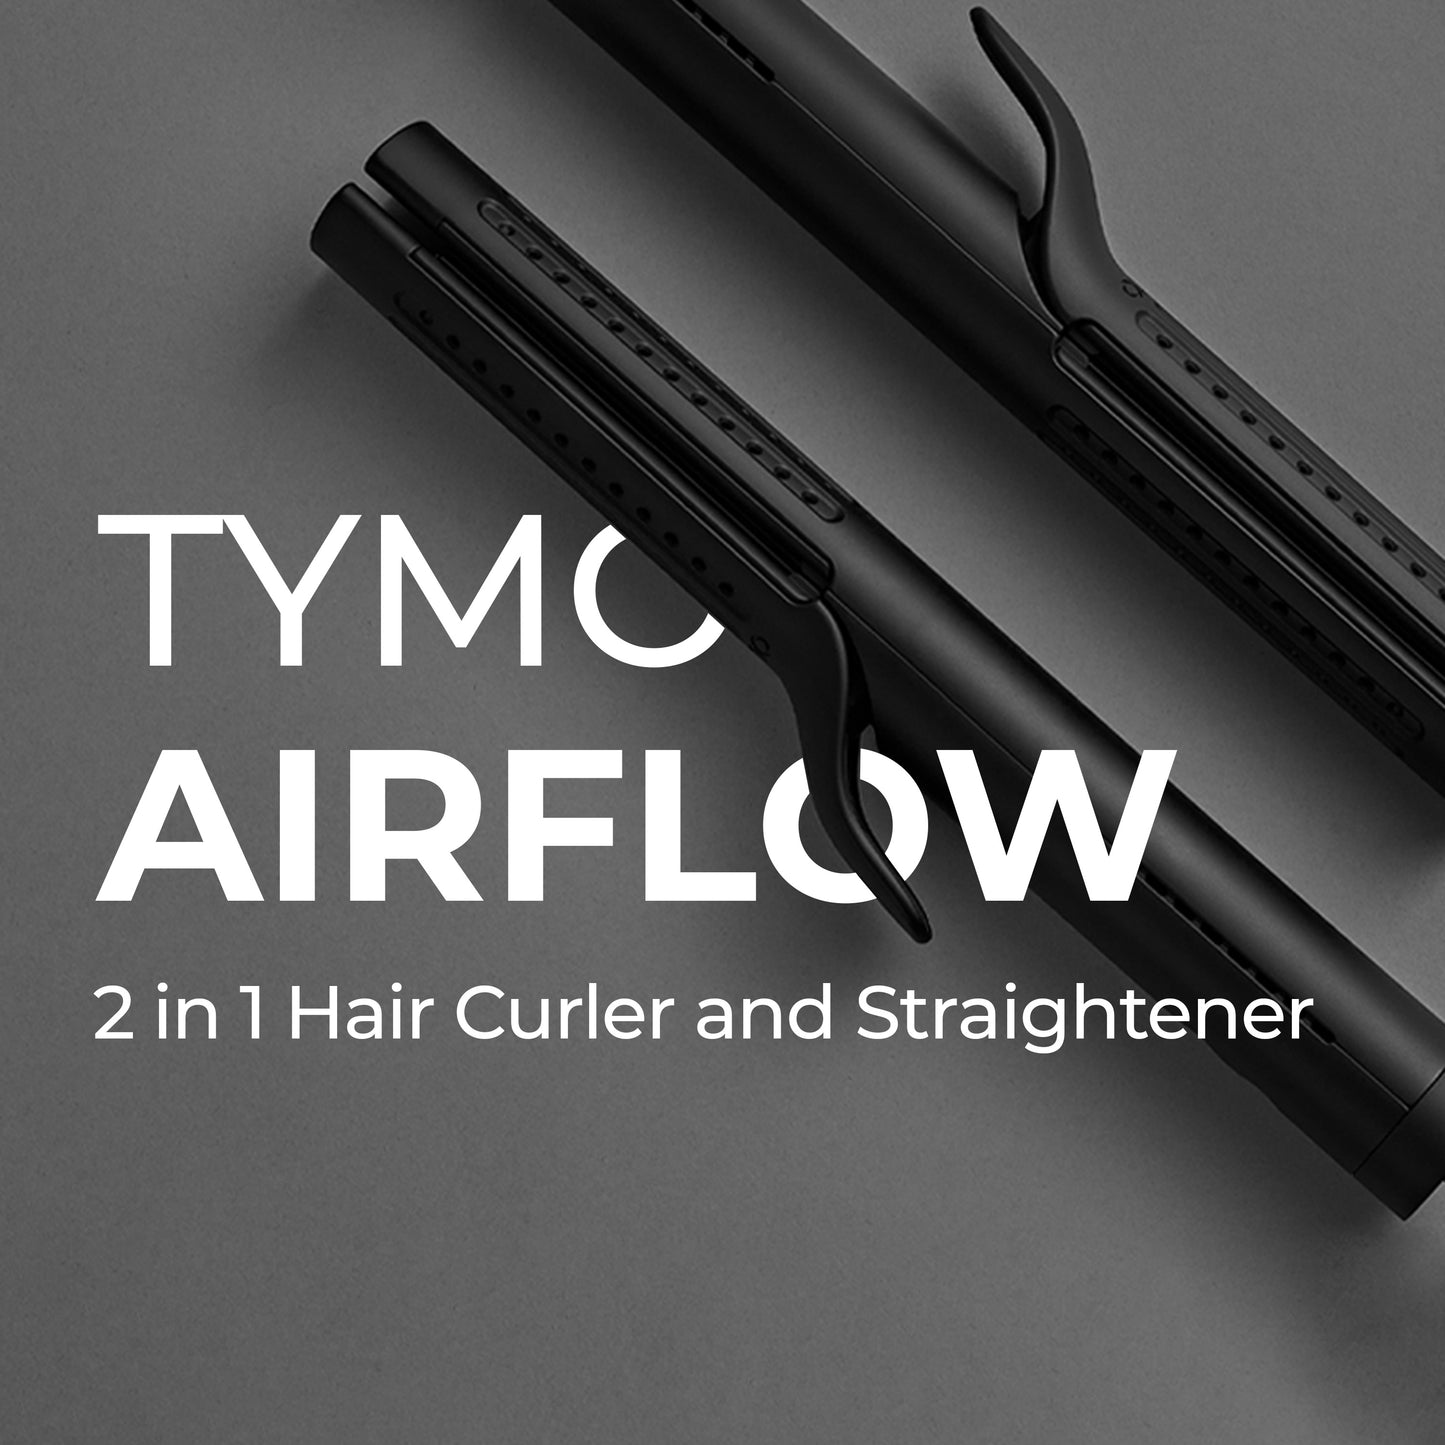 
                  
                    TYMO AIRFLOW 2 in 1 Hair Curler and Straightener
                  
                